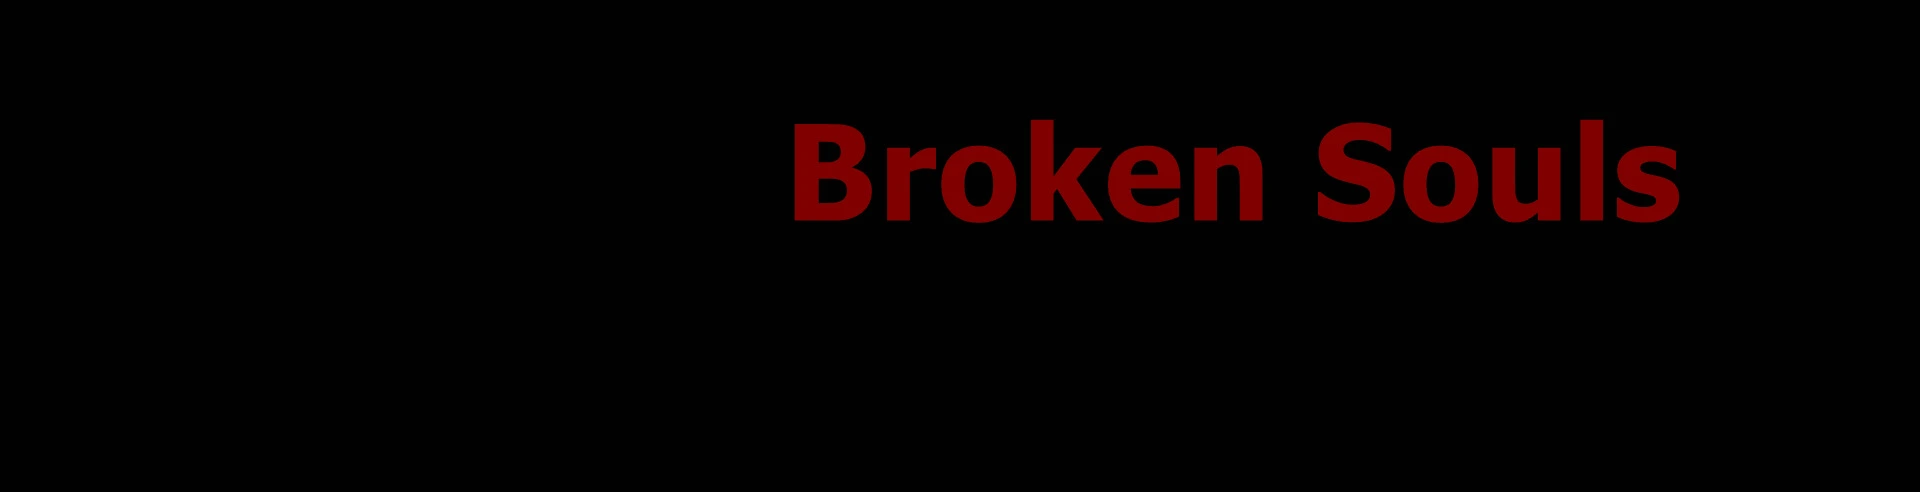 Heroes - Broken Souls [v0.1.1] main image